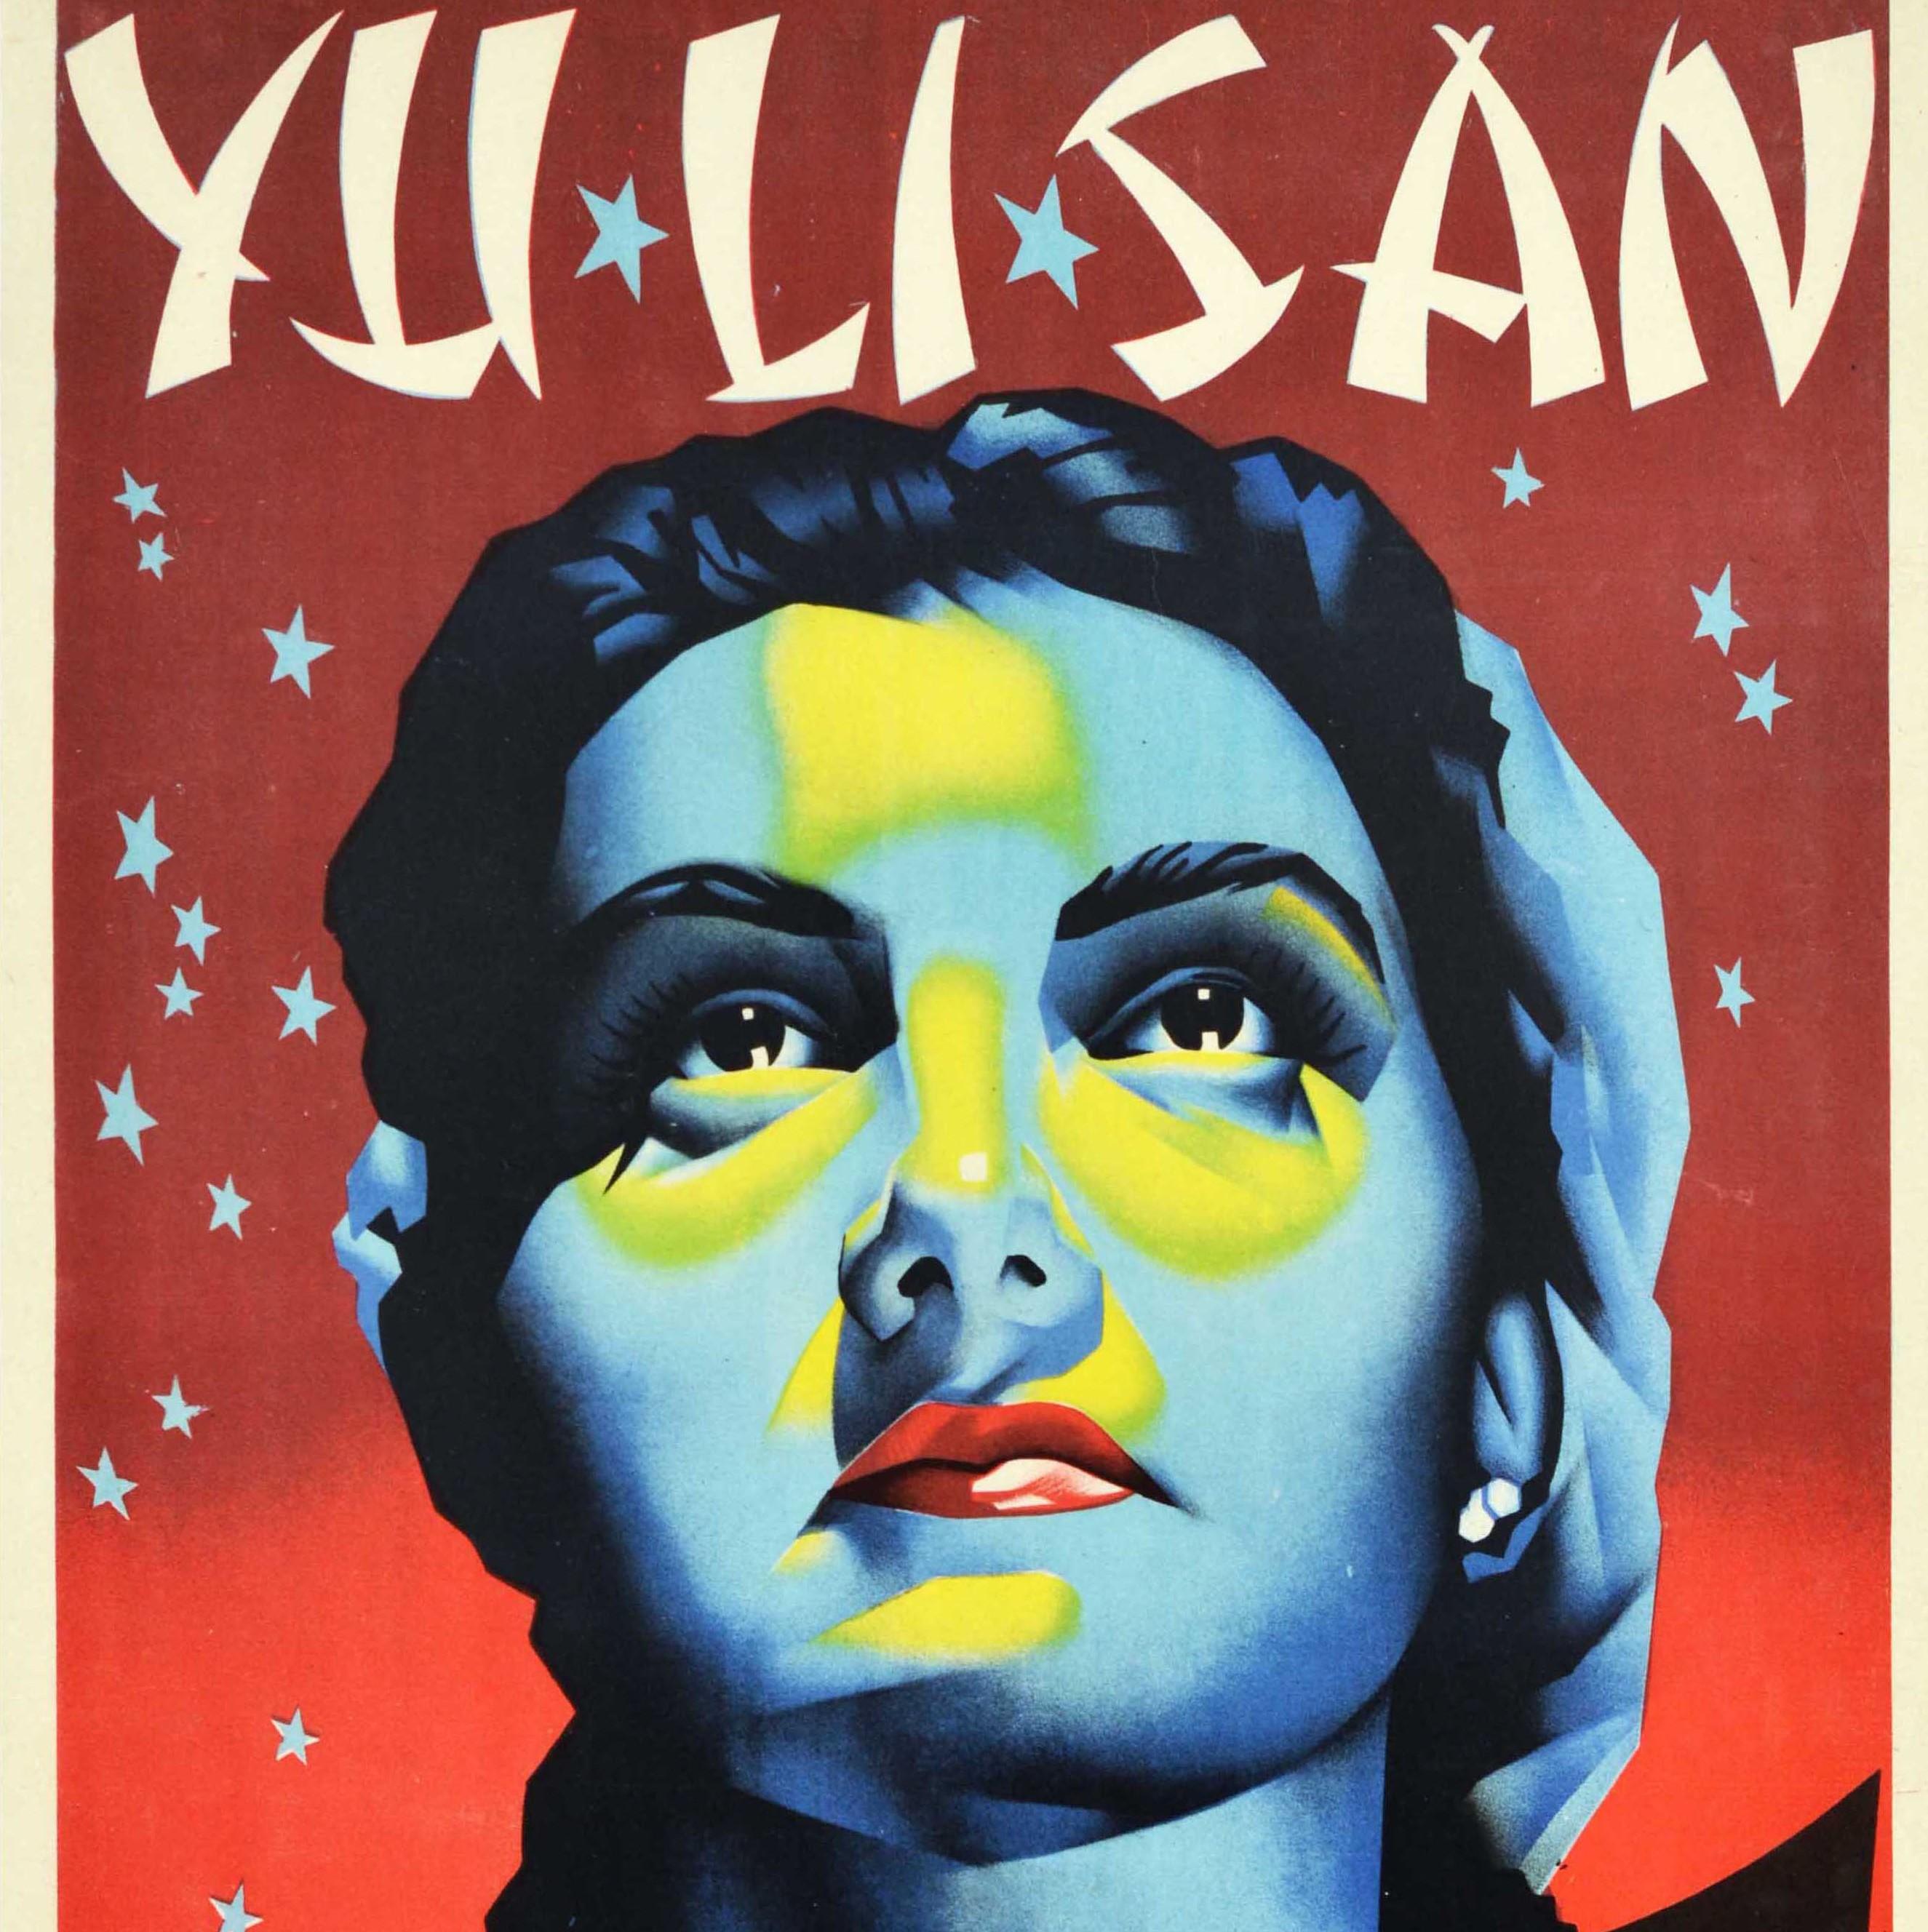 Spanish Original Vintage Poster Yu Li San Enigmatic Medium Of Professor Alba Magic Show